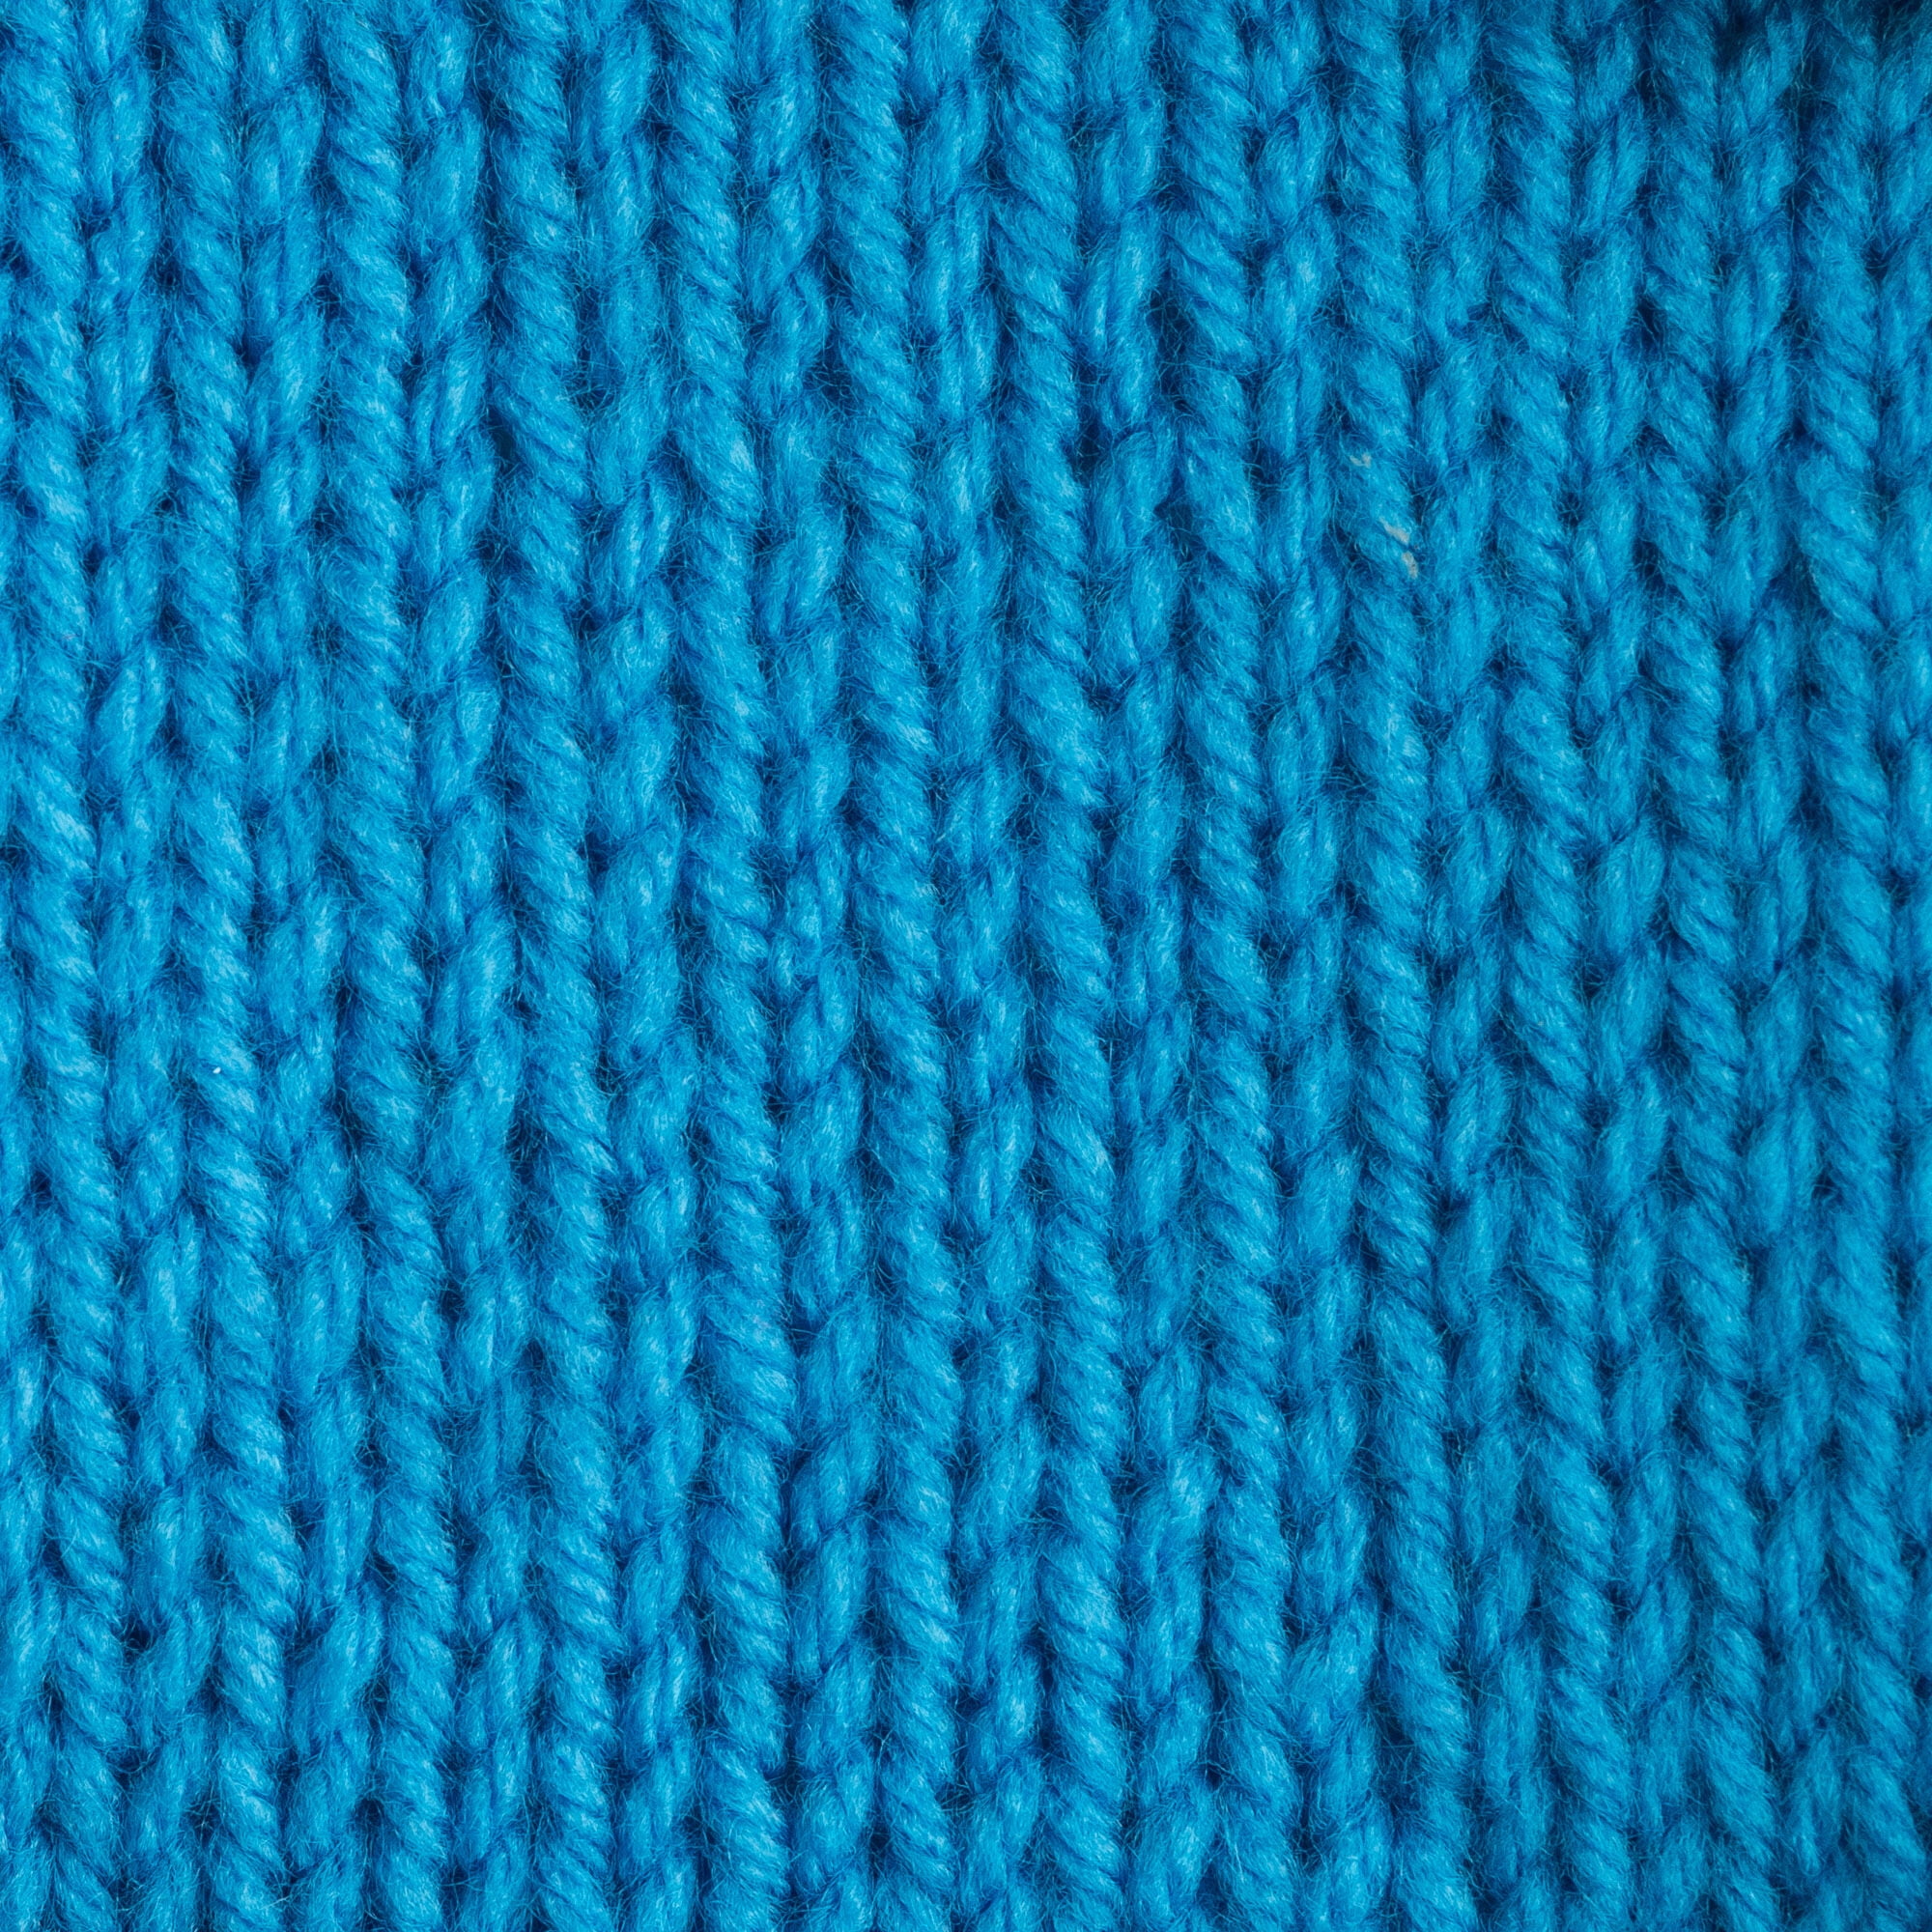 Bernat Super Value Cool Blue Yarn - 3 Pack Of 198g/7oz - Acrylic